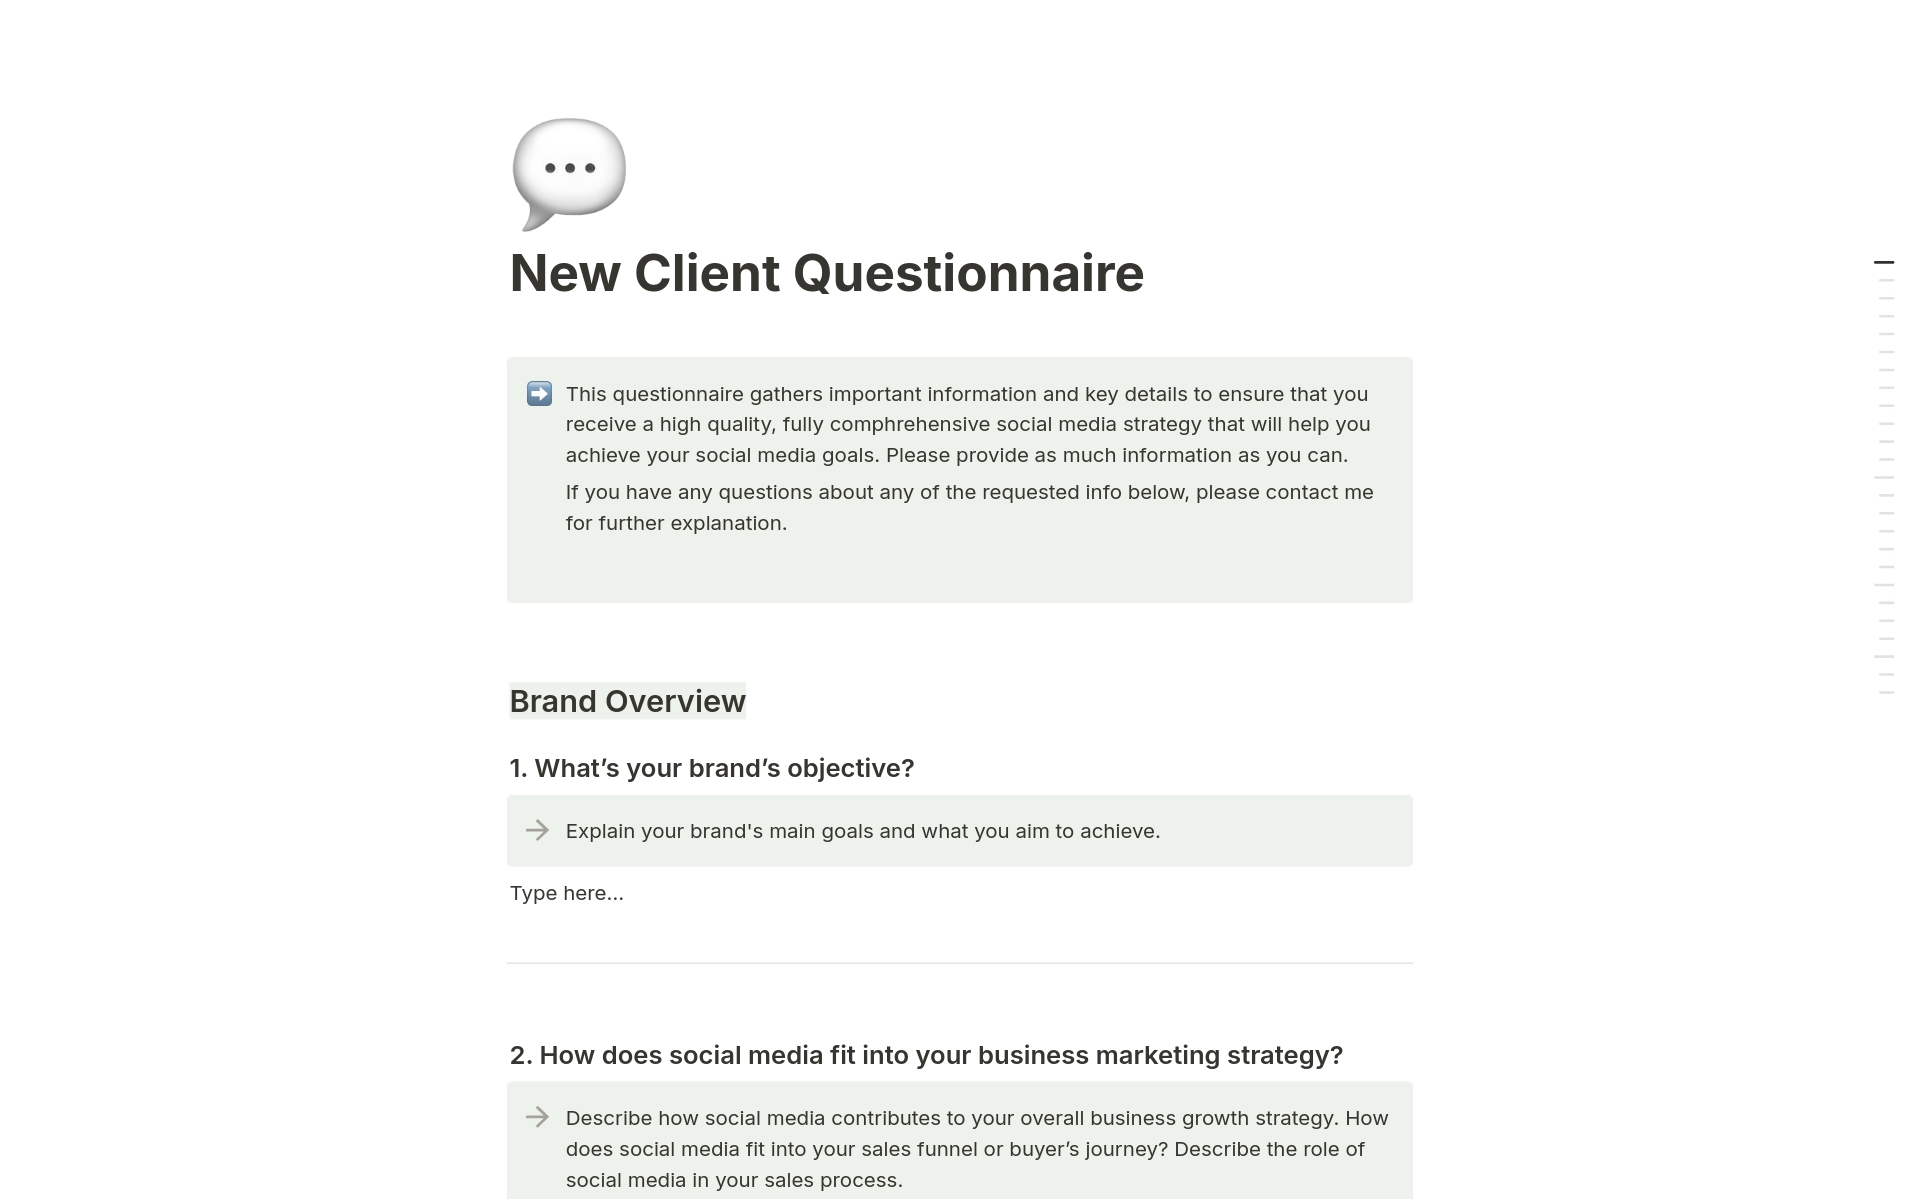 Vista previa de plantilla para New Client Questionnaire